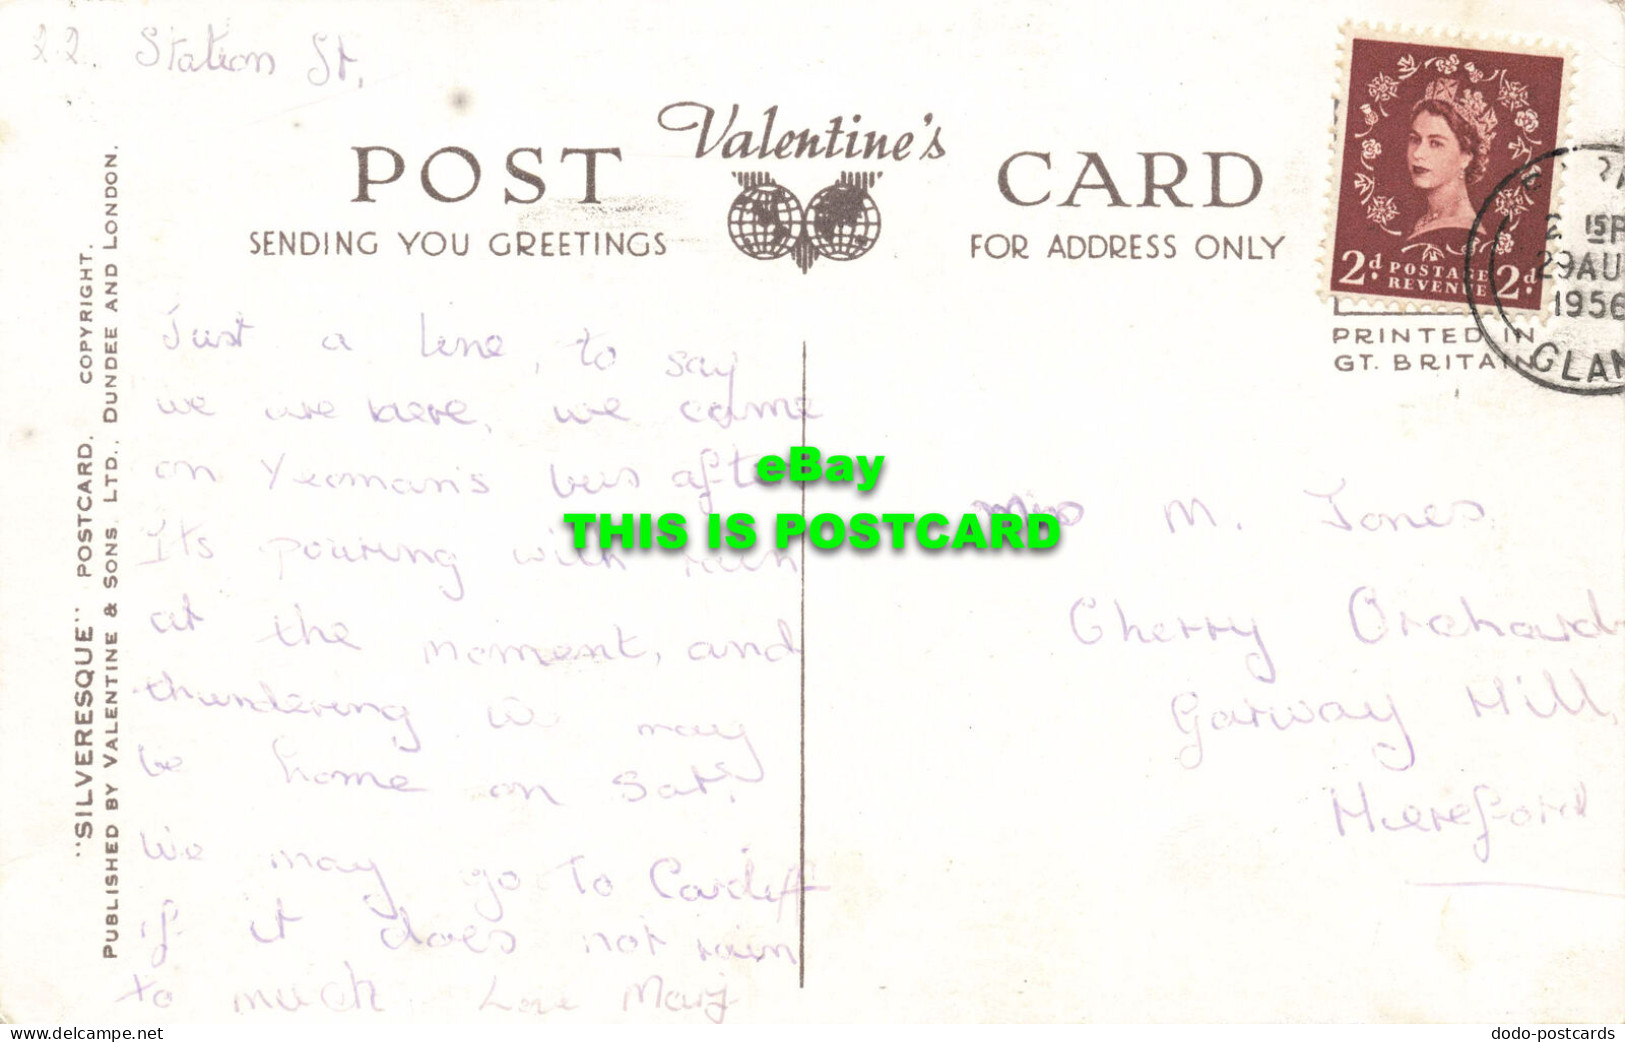 R567204 Barry Island. W. 4792. Silveresque Postcard. 1956. Valentines. Multi Vie - World